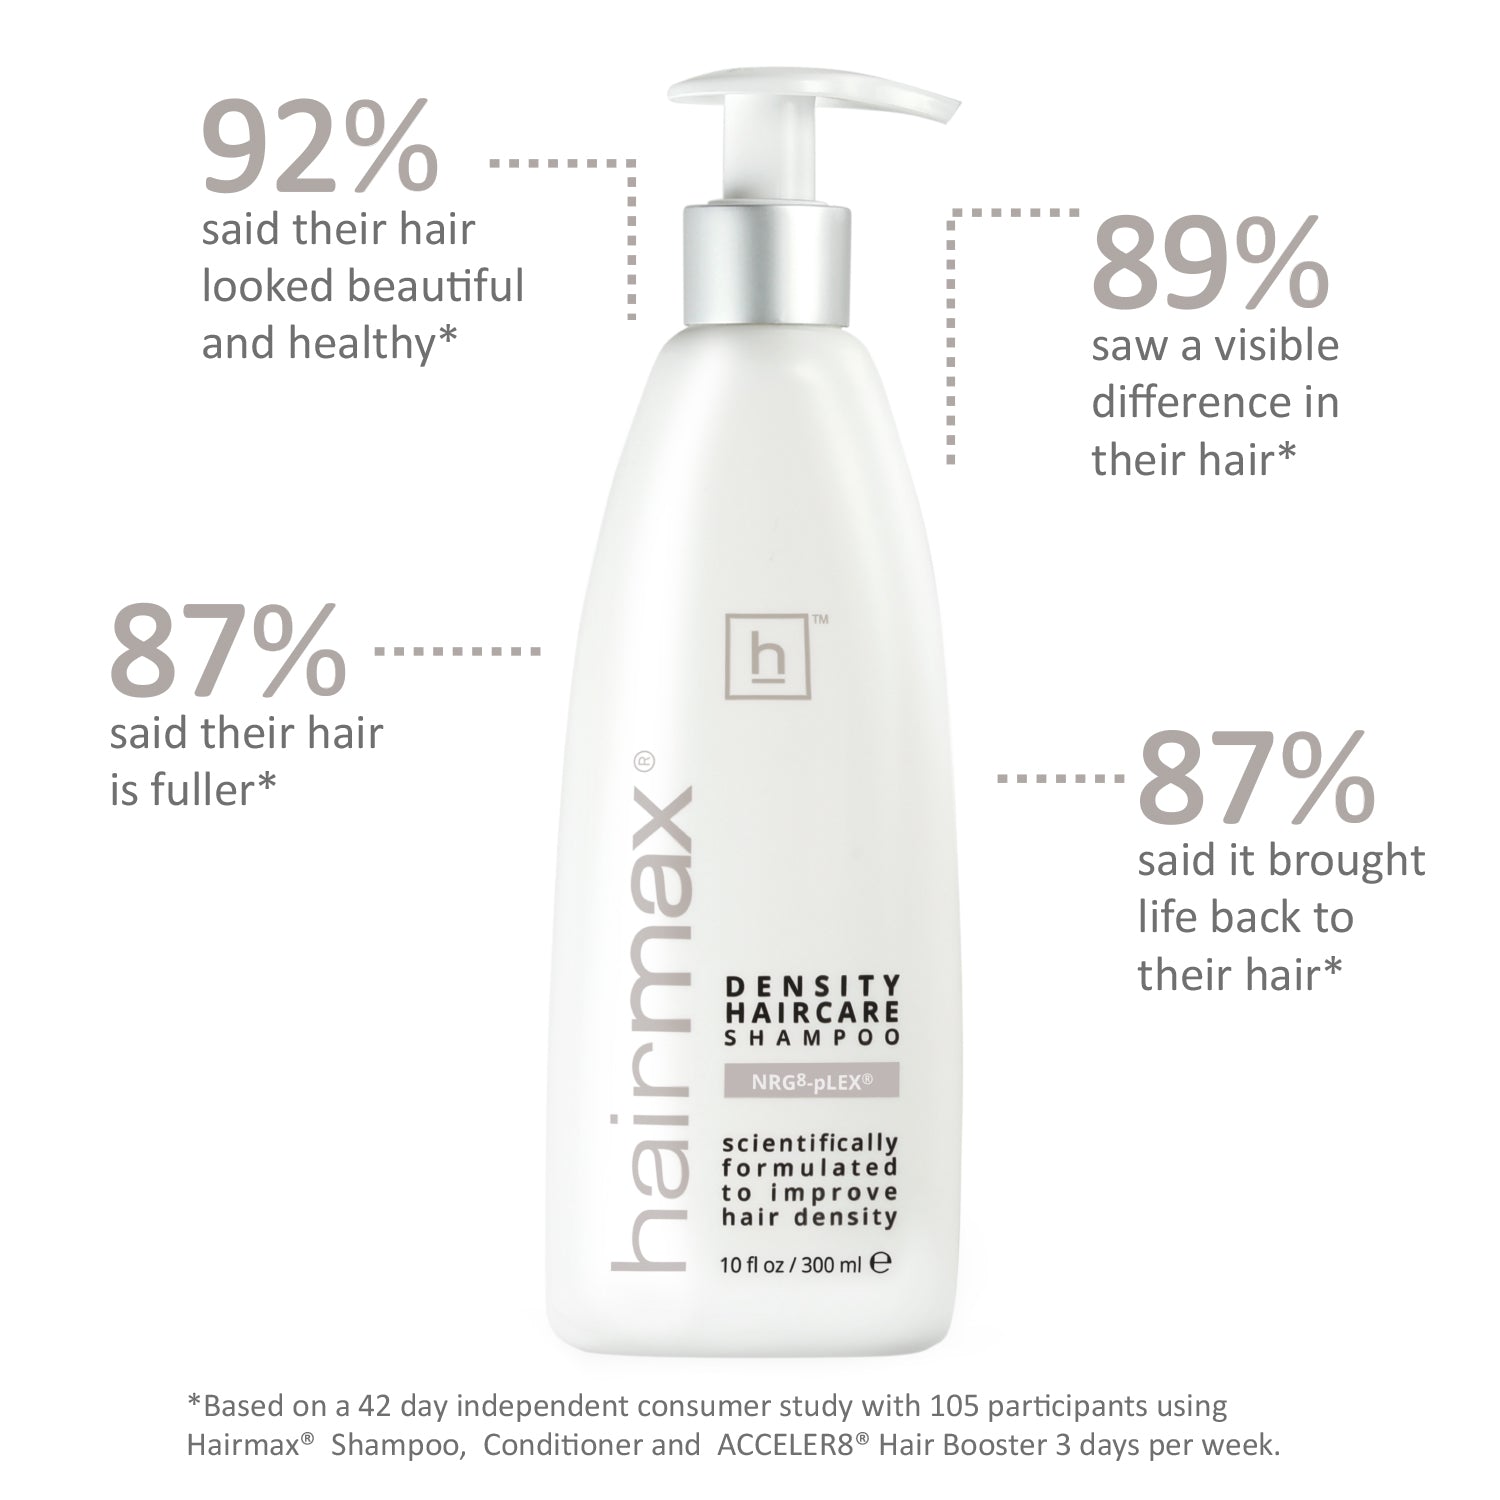 Density Haircare Shampoo